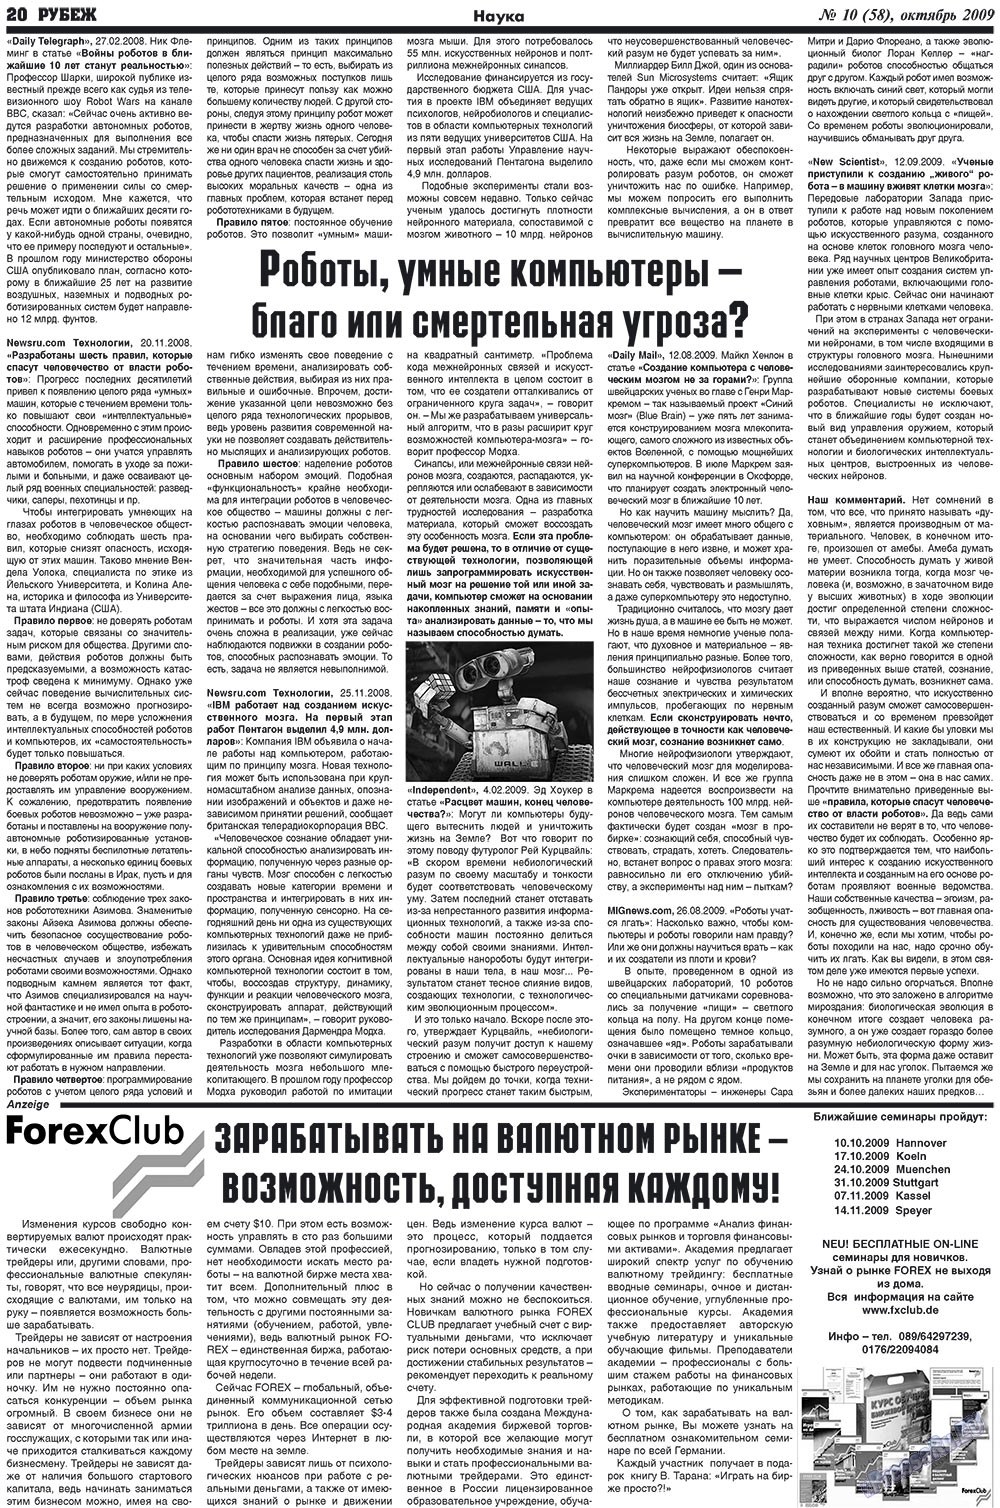 Рубеж, газета. 2009 №10 стр.20